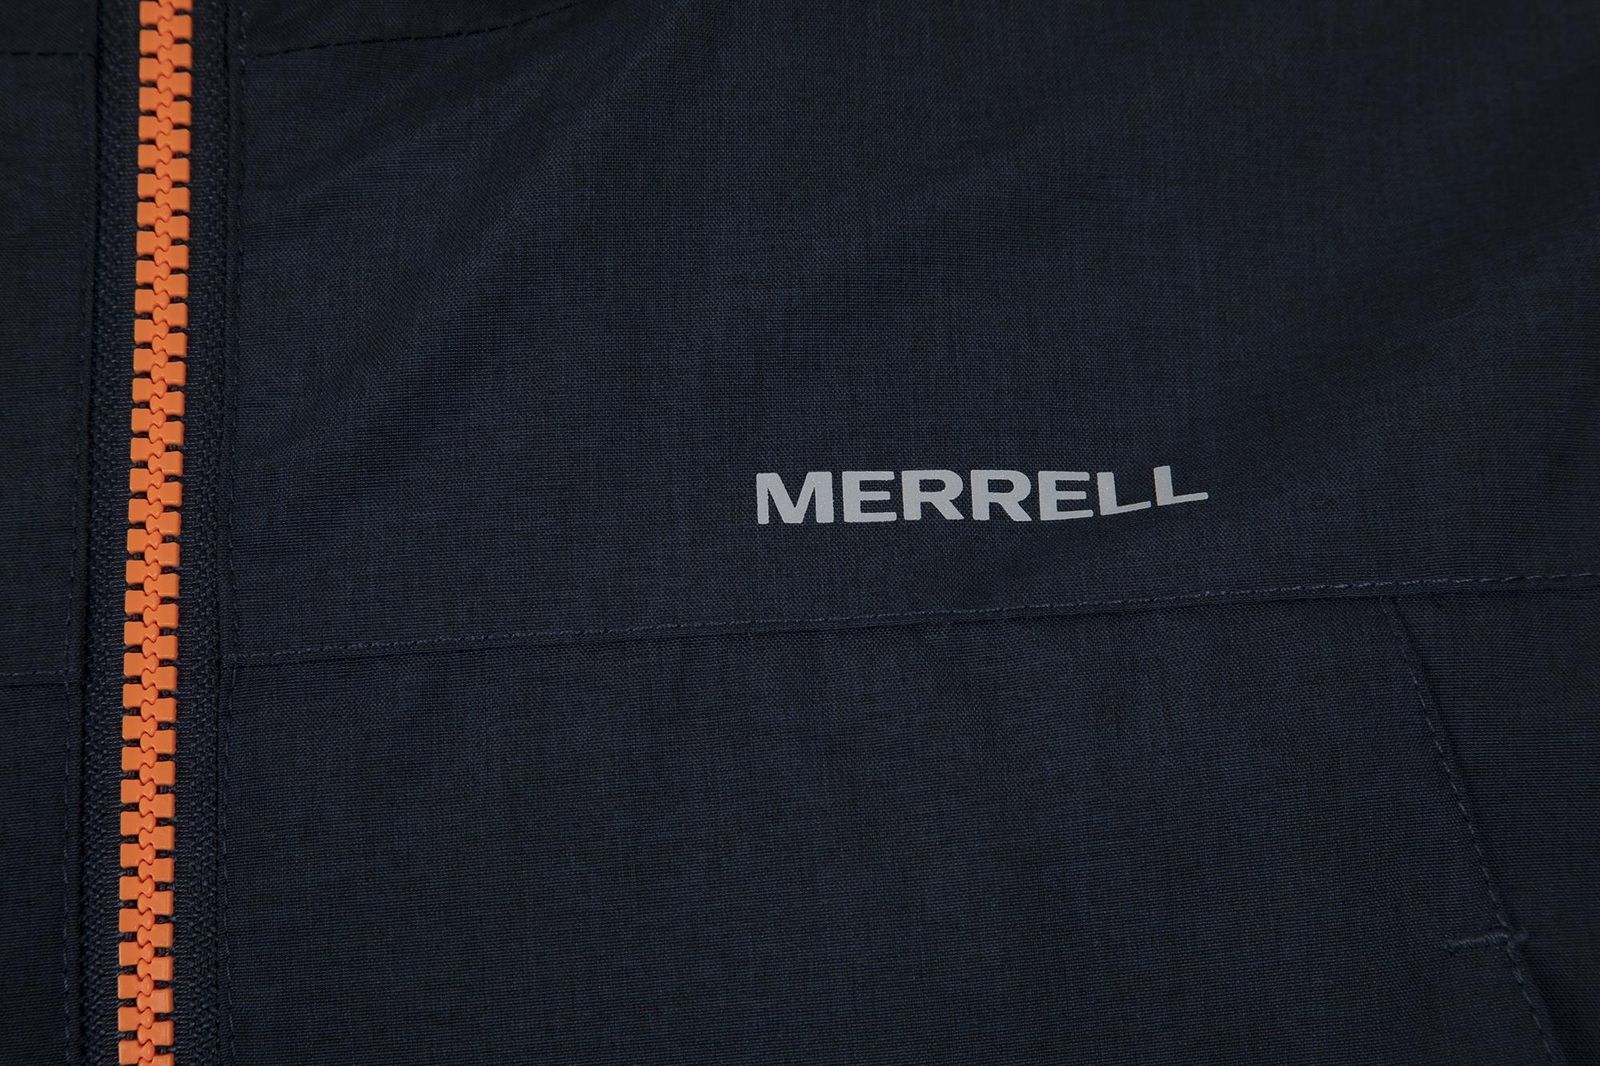   Merrell Men's Windbreaker, : -. S19AMRJAM04-Z4.  54